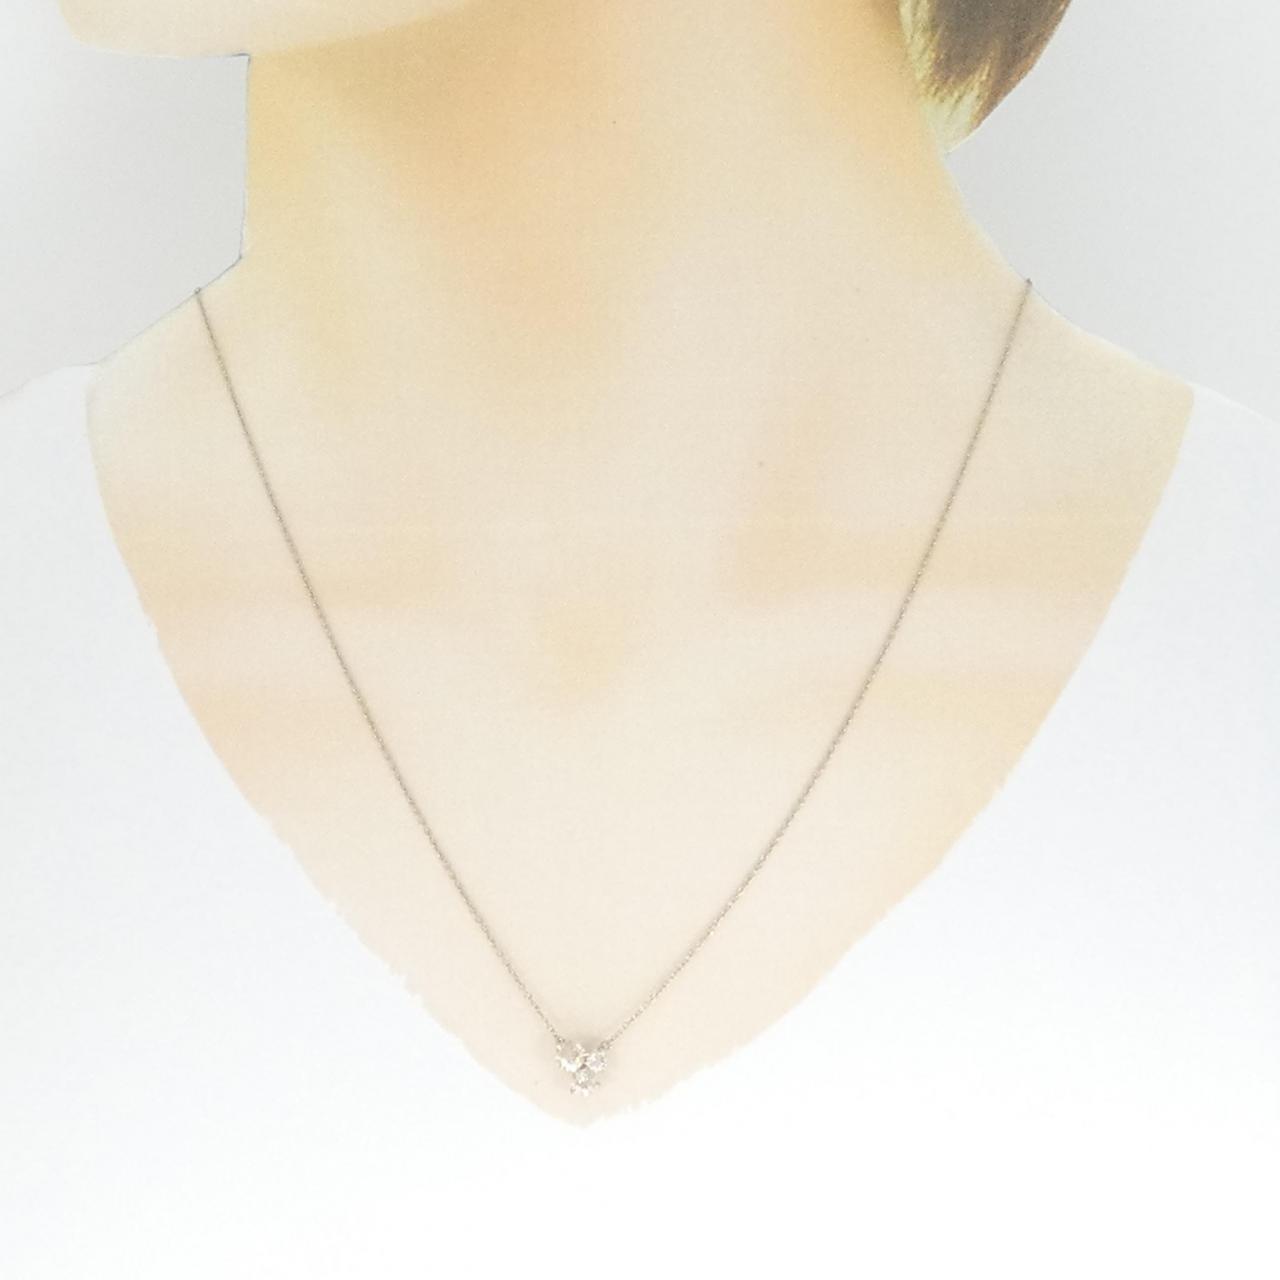 Kashikey necklace 0.55CT